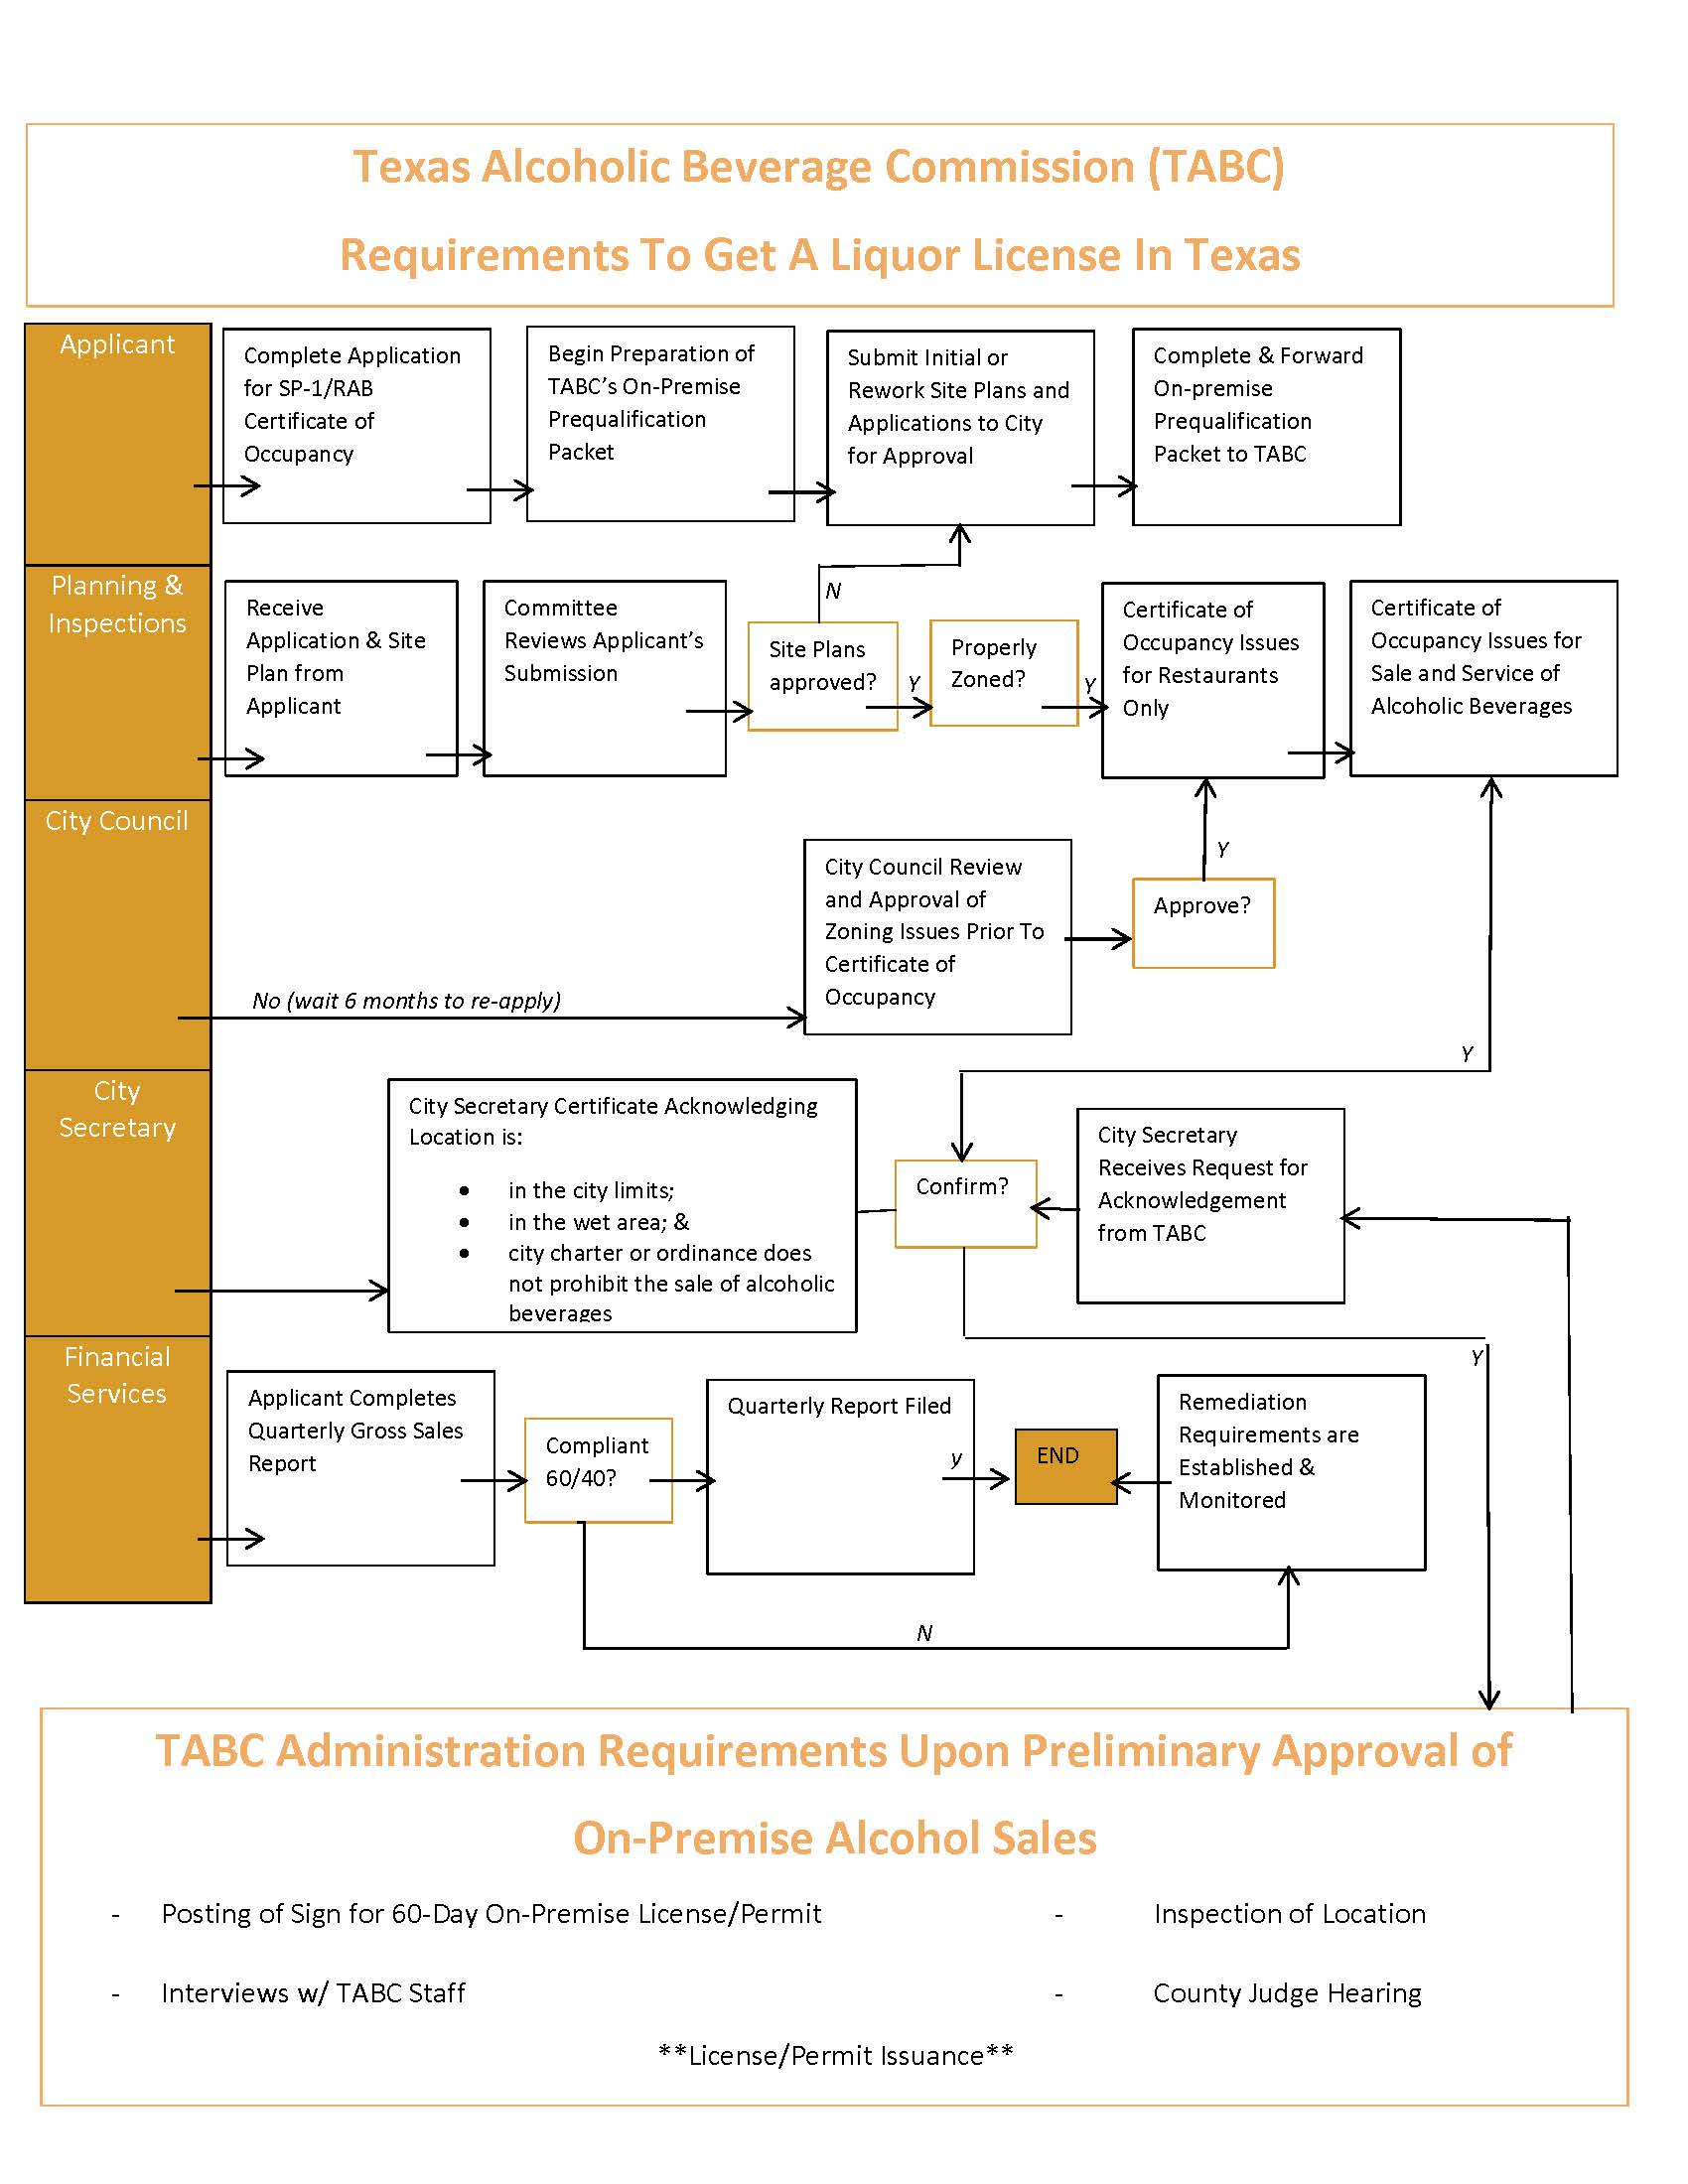 The TABC Permitting Process